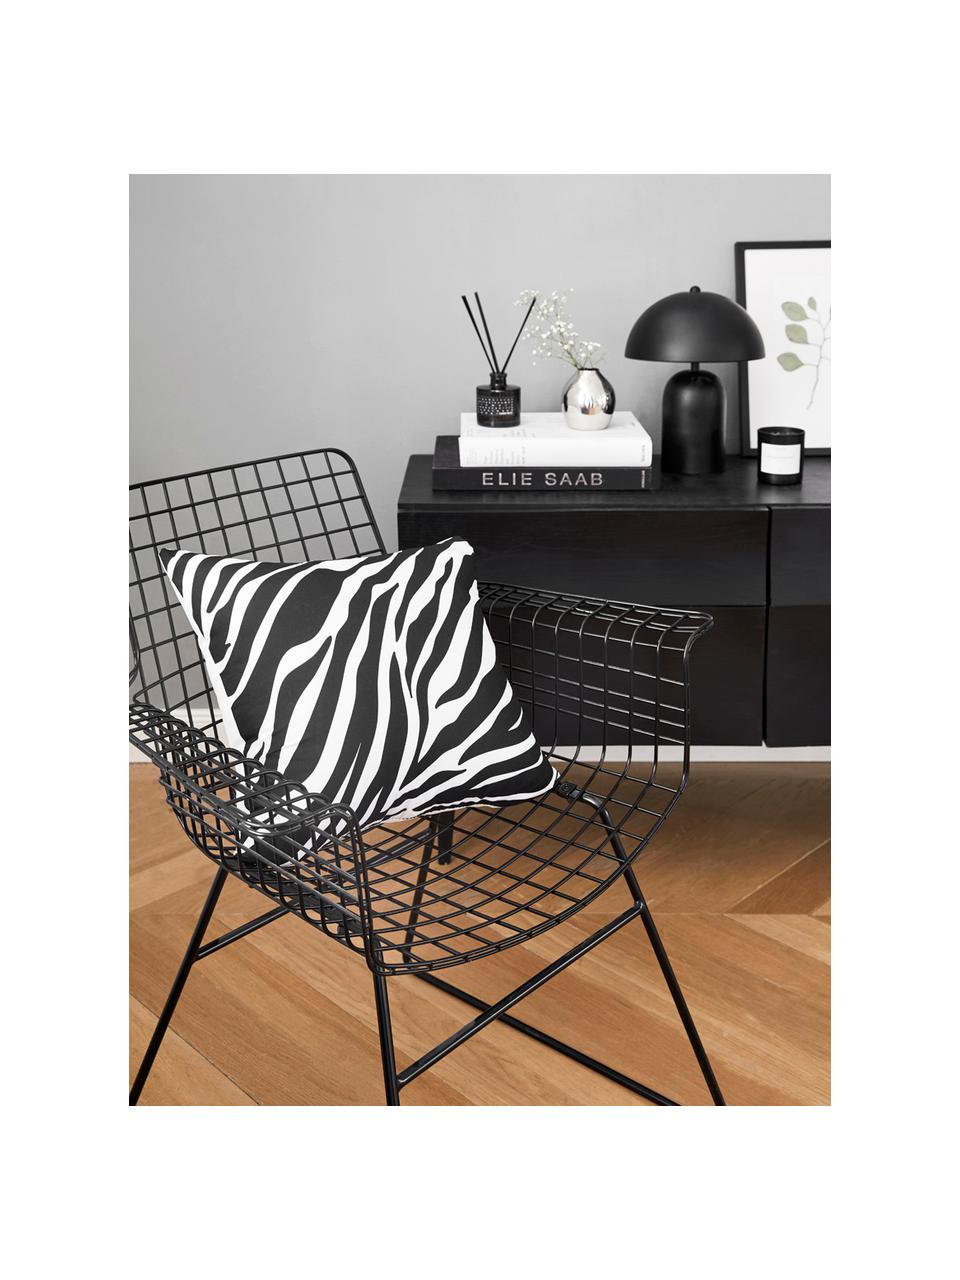 Kussenhoes Pattern met zebra print in zwart/wit, 100% polyester, Wit, zwart, 45 x 45 cm